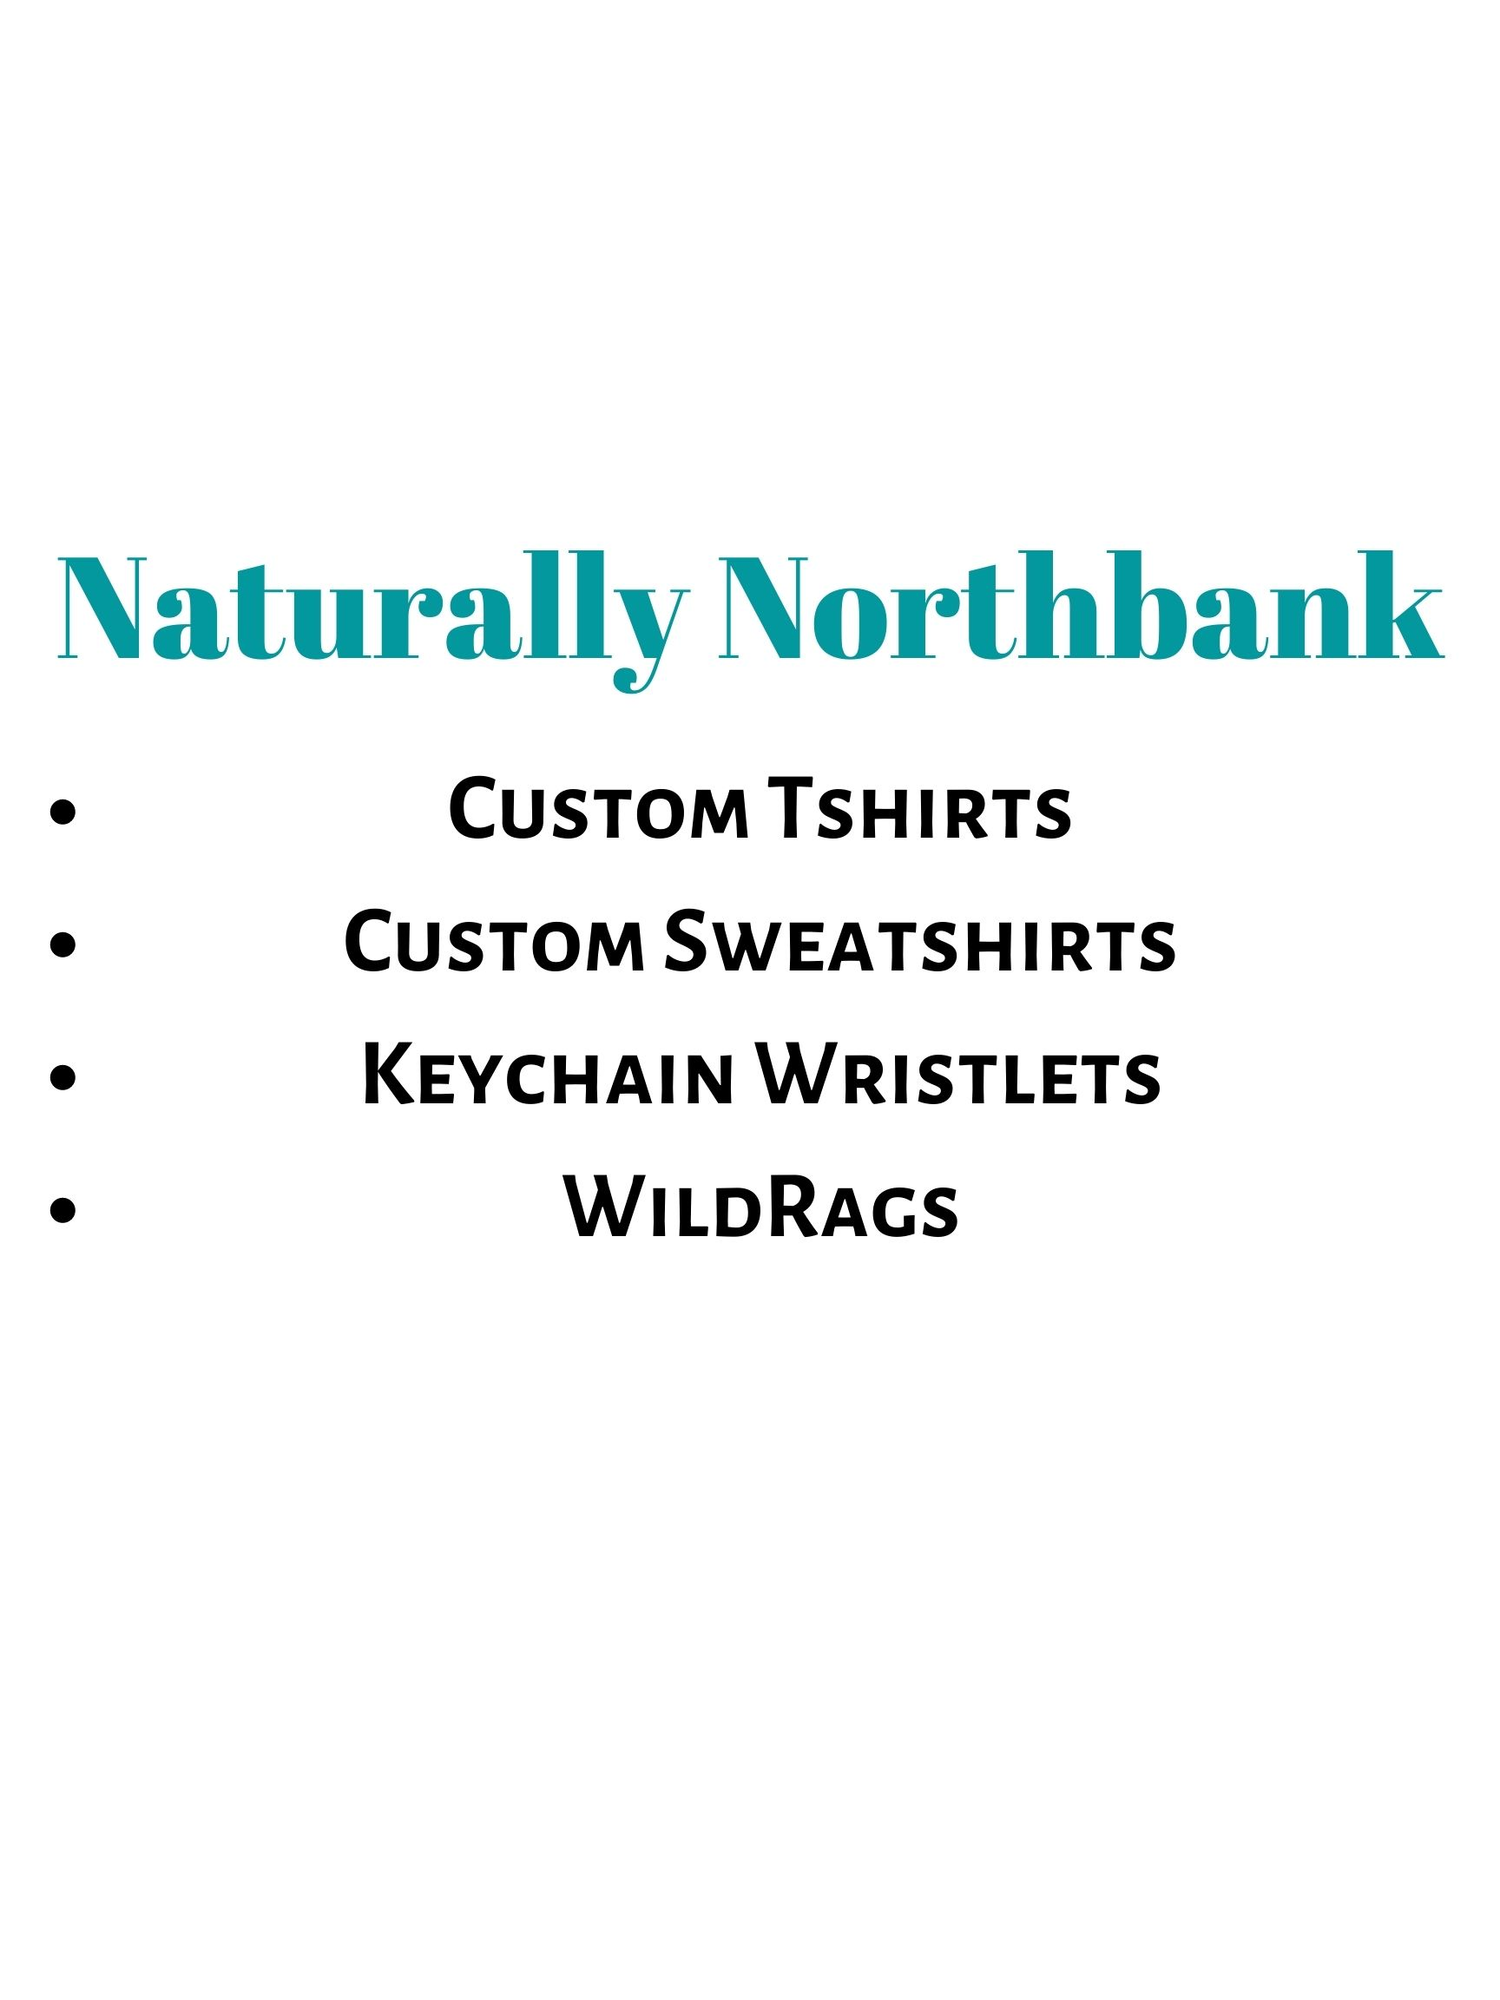 Naturally Northbank